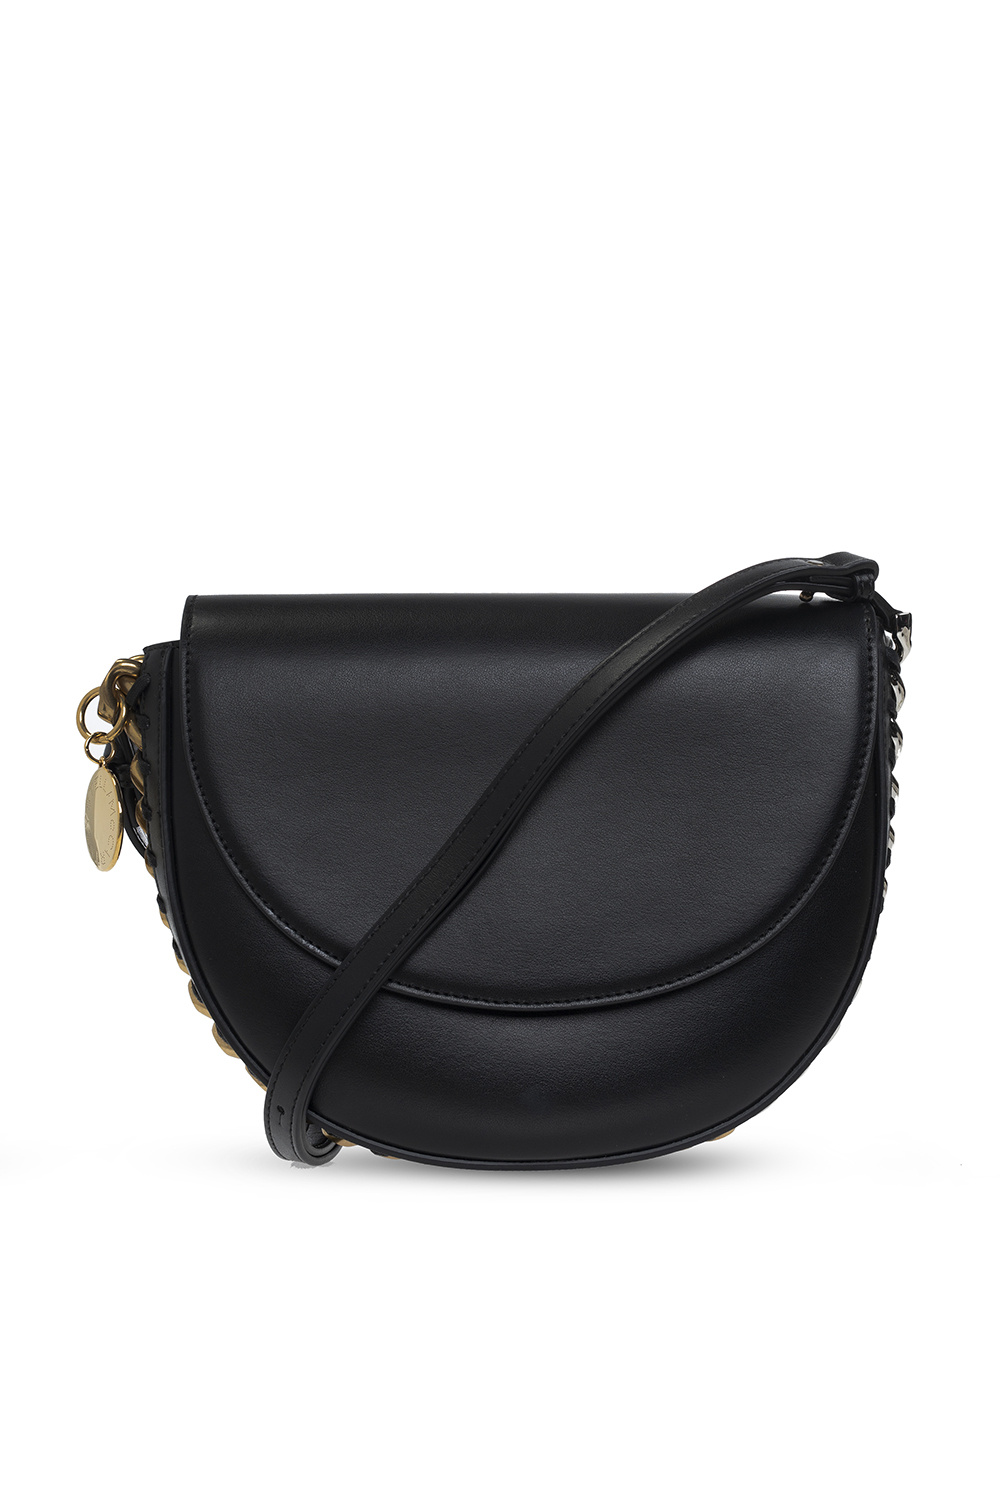 Stella McCartney 'Frayme Medium' shoulder bag | Women's Bags | Vitkac